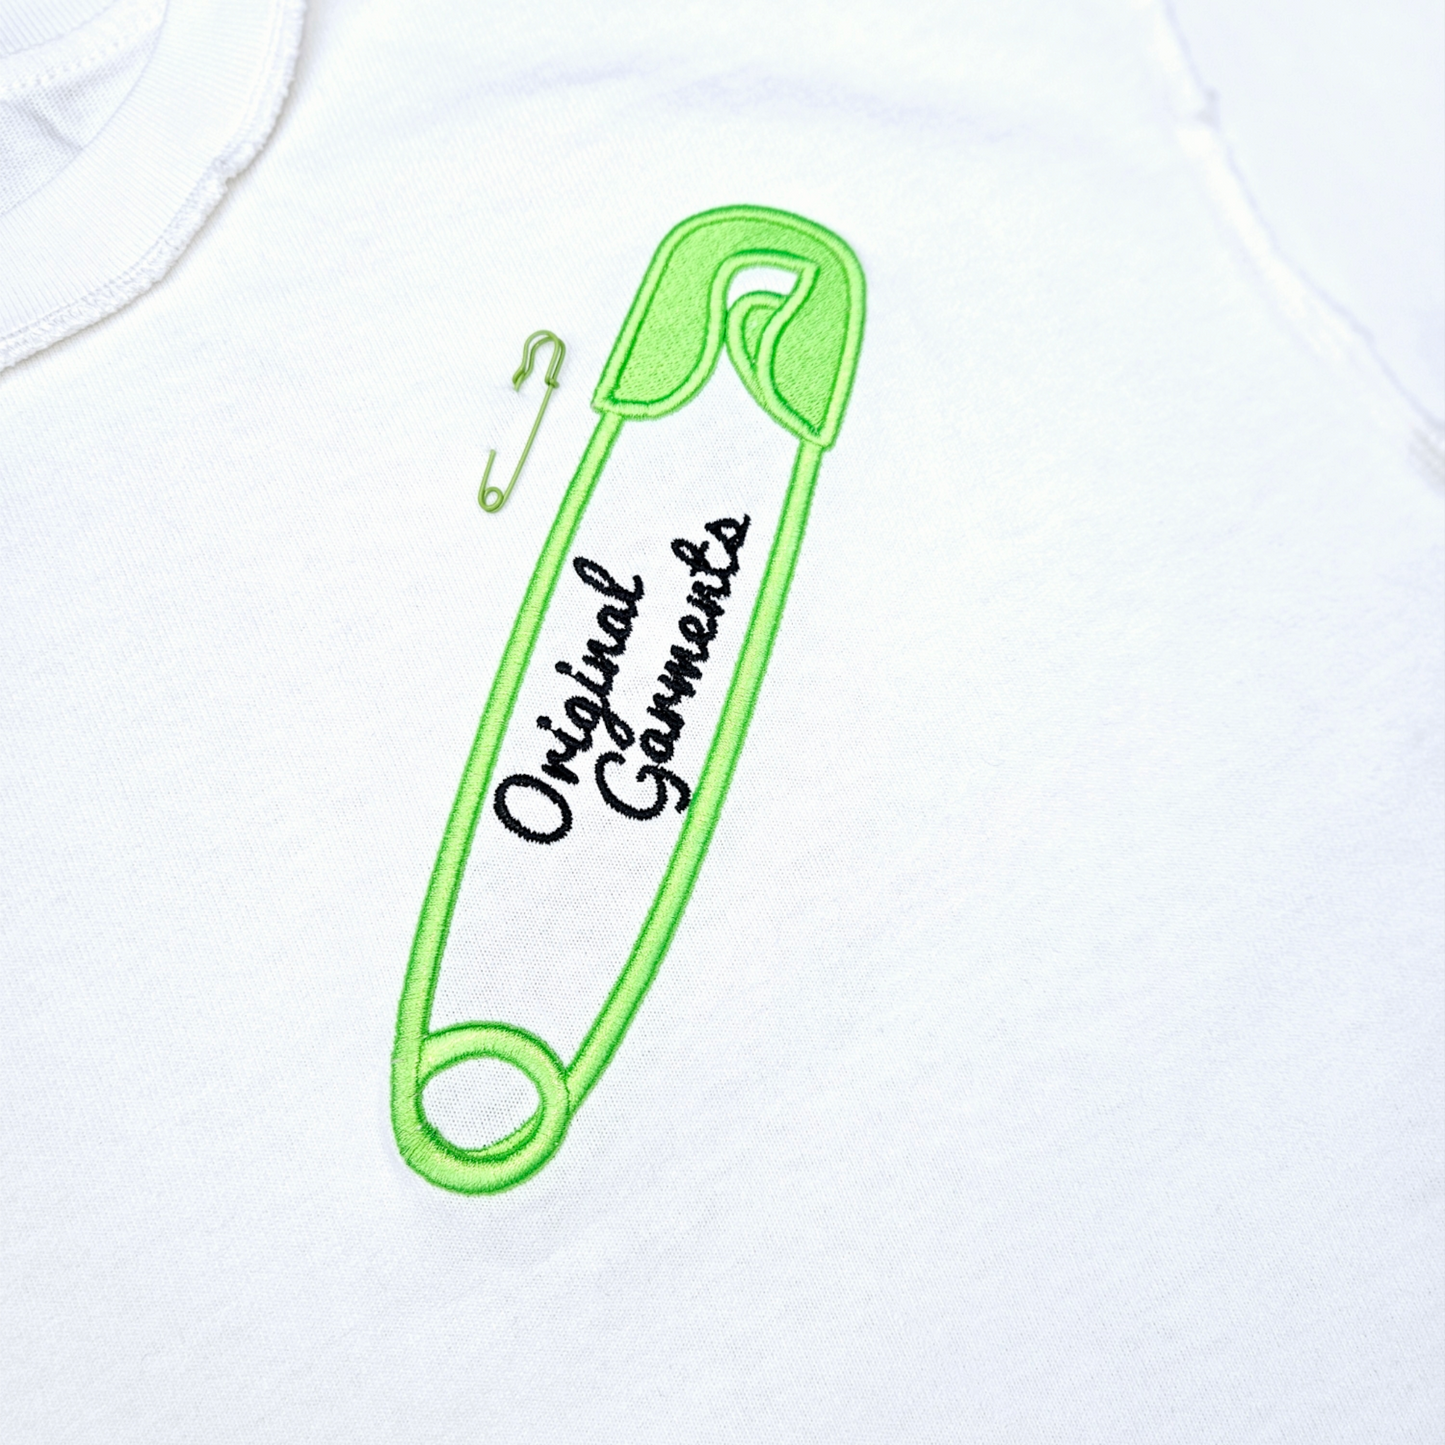 3D oG Pin Signature T-Shirt Vintage White